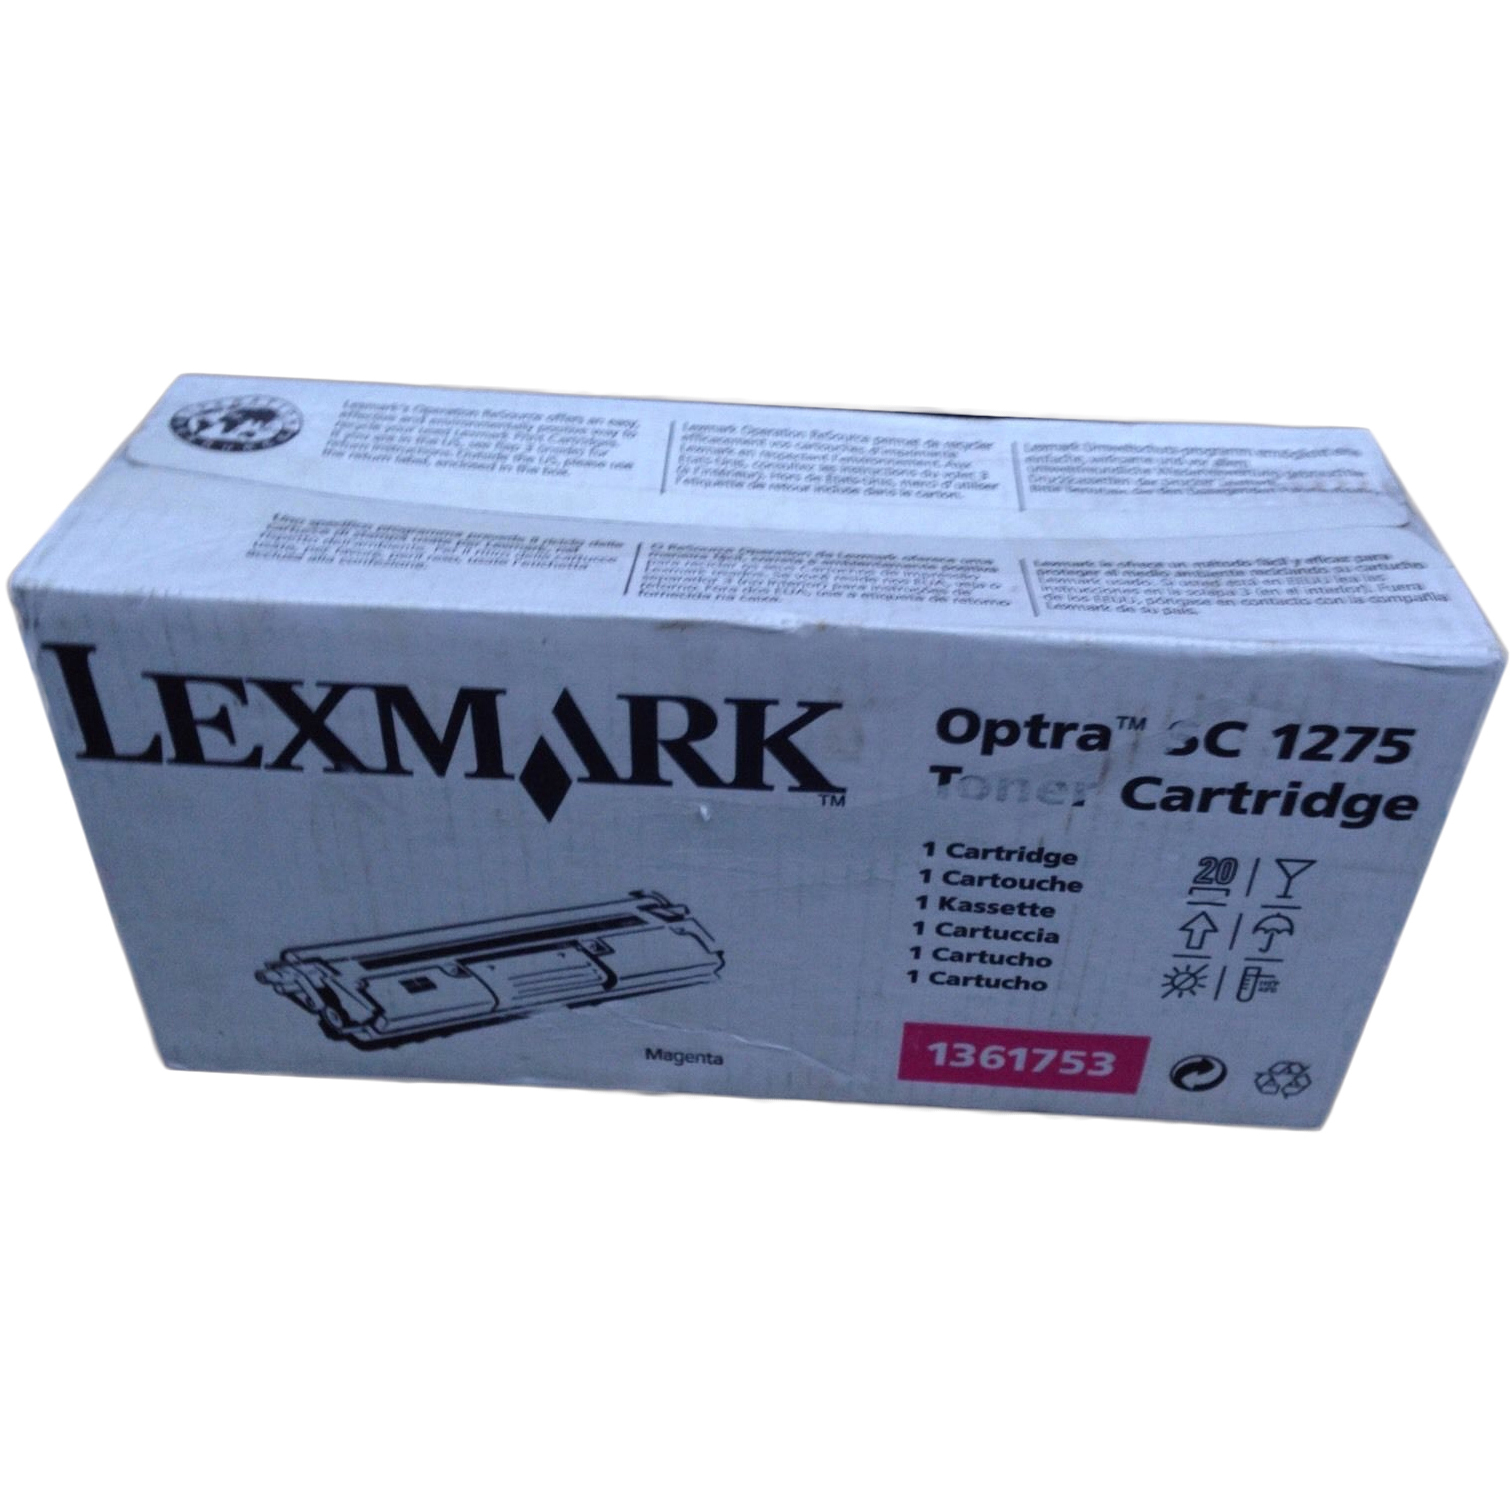 Original Lexmark 1361753 Magenta Toner Cartridge (1361753)